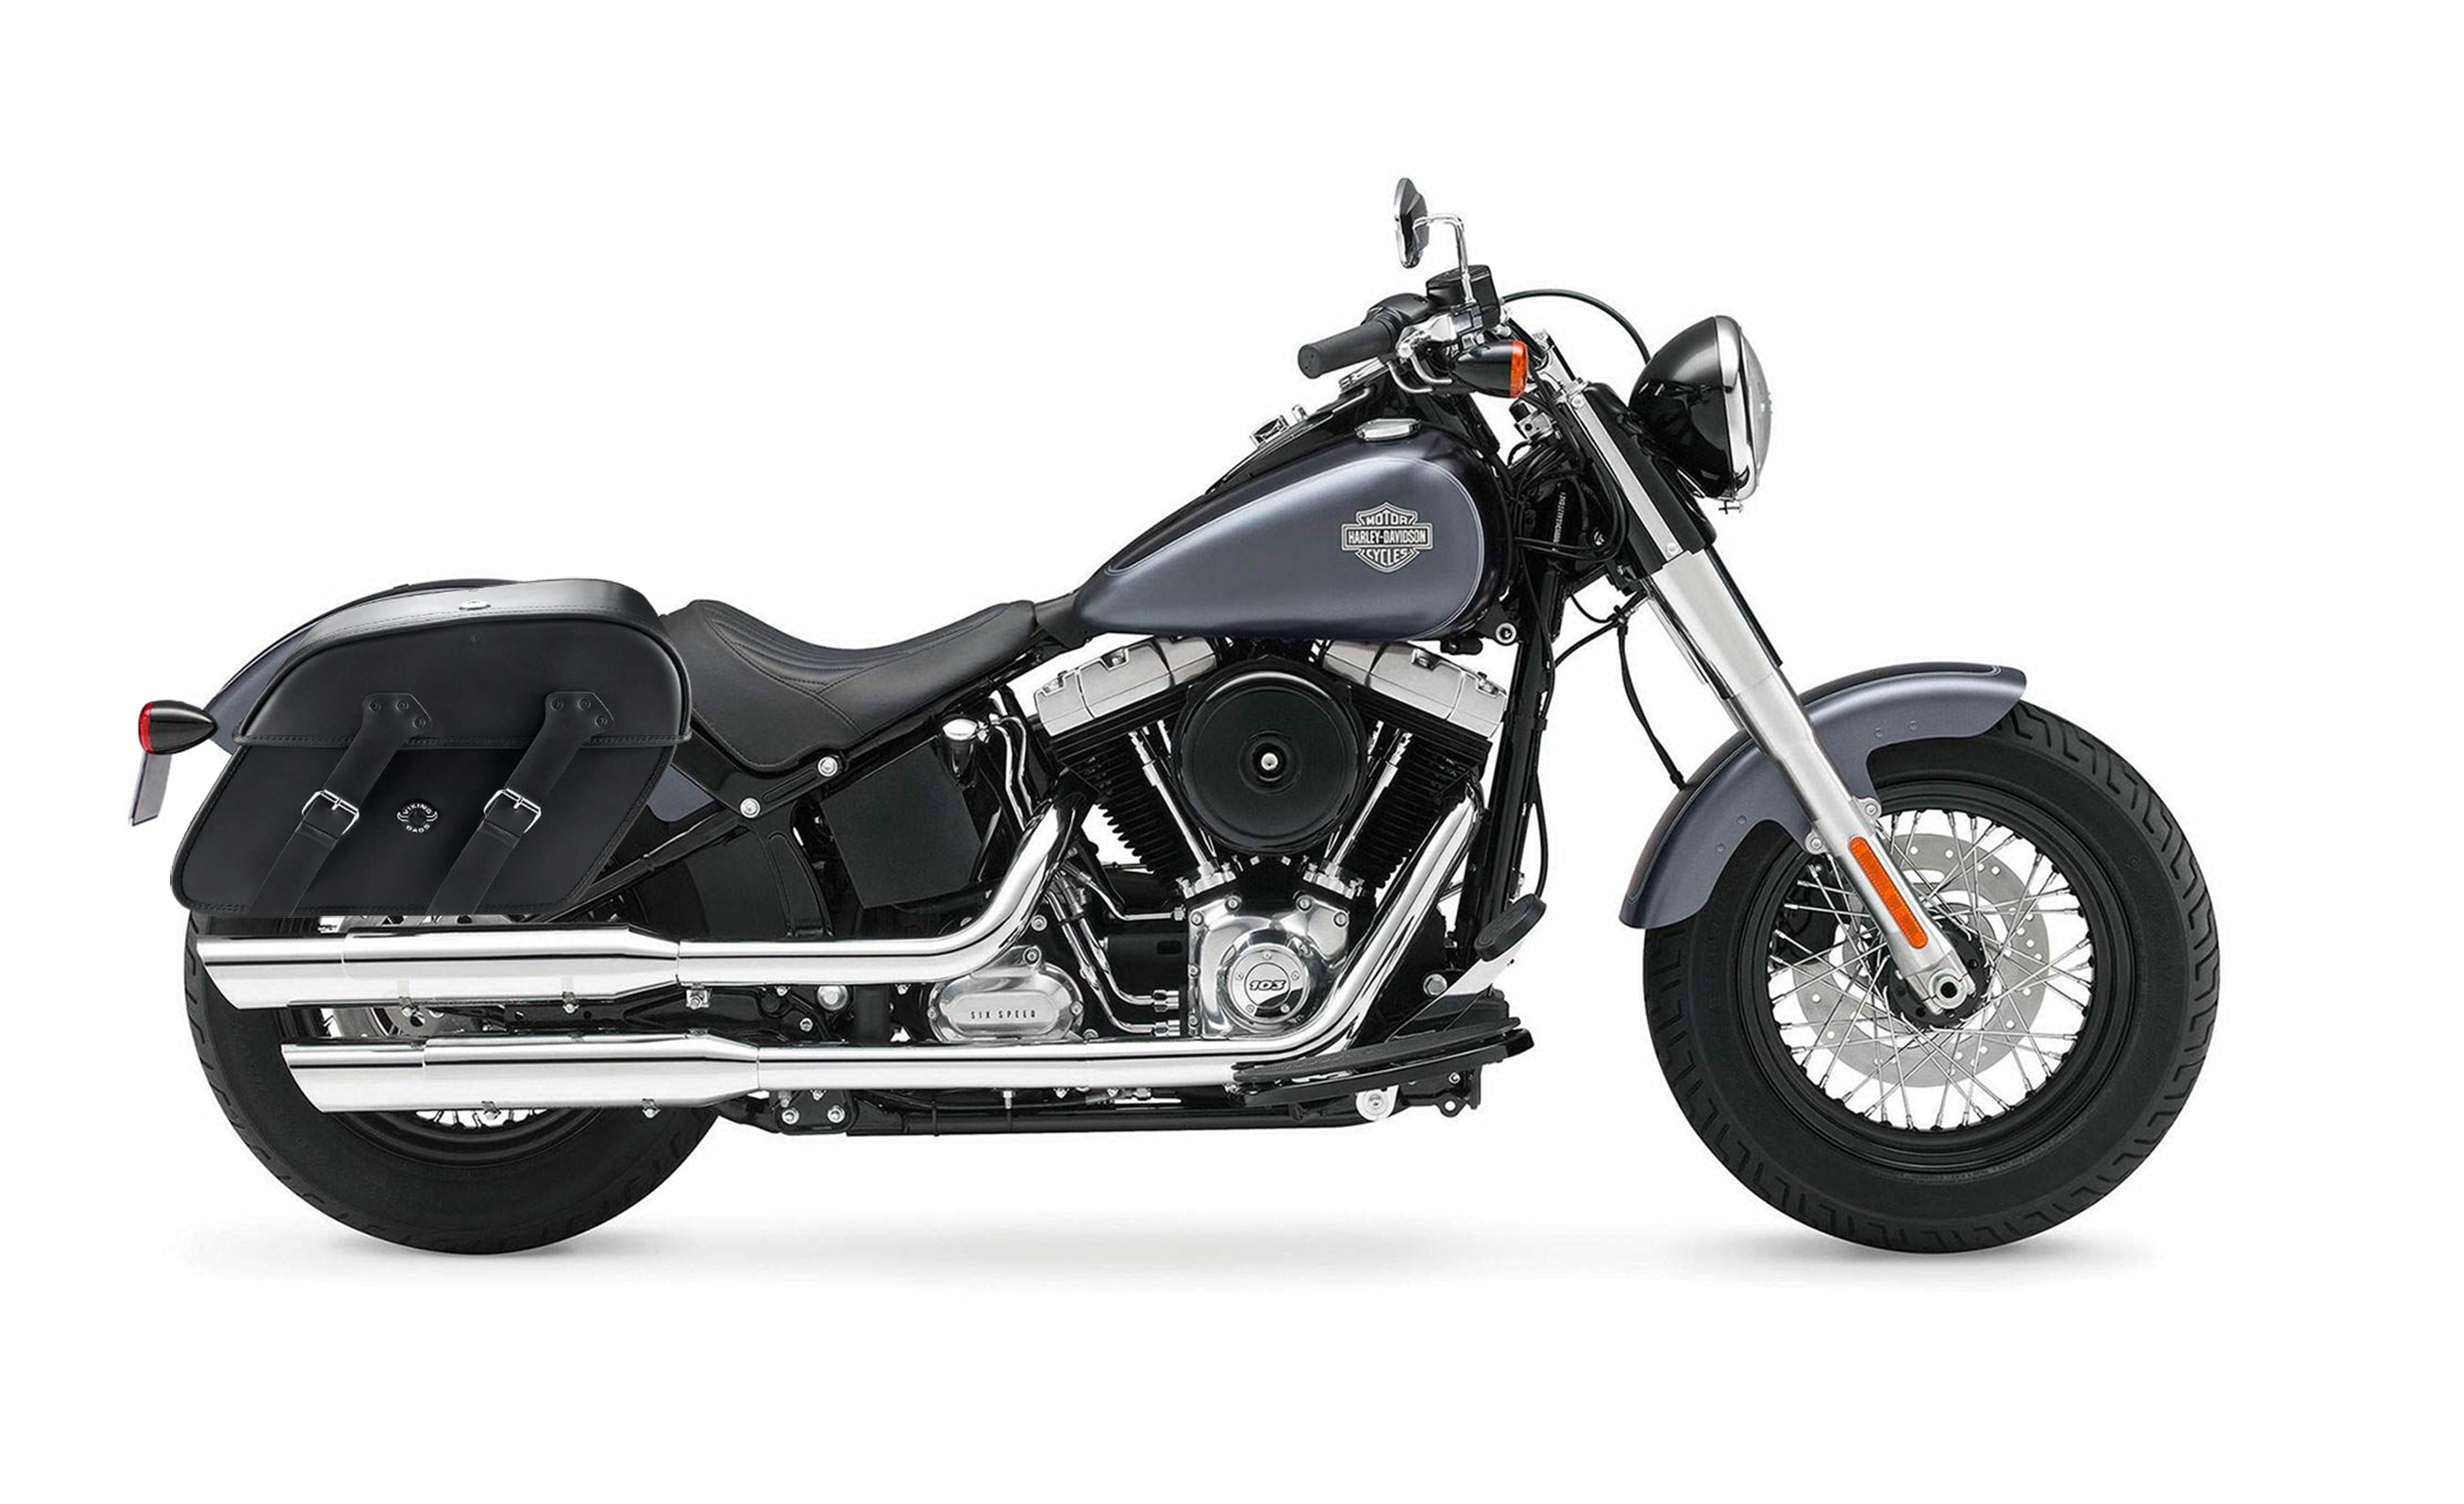 32L - Raven Large Motorcycle Leather Saddlebags for Harley Softail Slim FLS on Bike Photo @expand